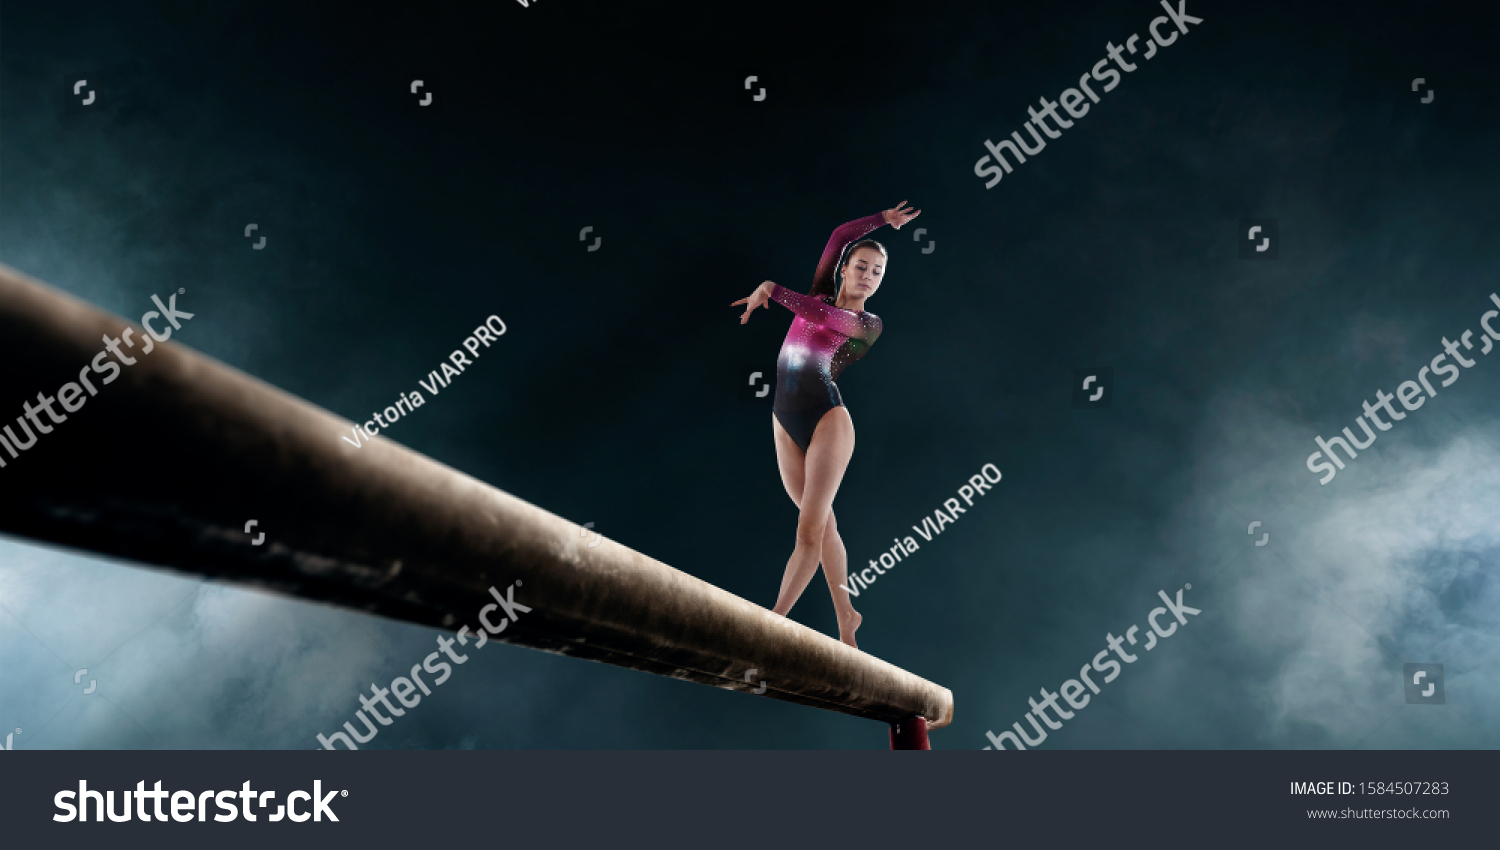 Female gymnast doing a complicated trick on gymnastics balance beam. #1584507283